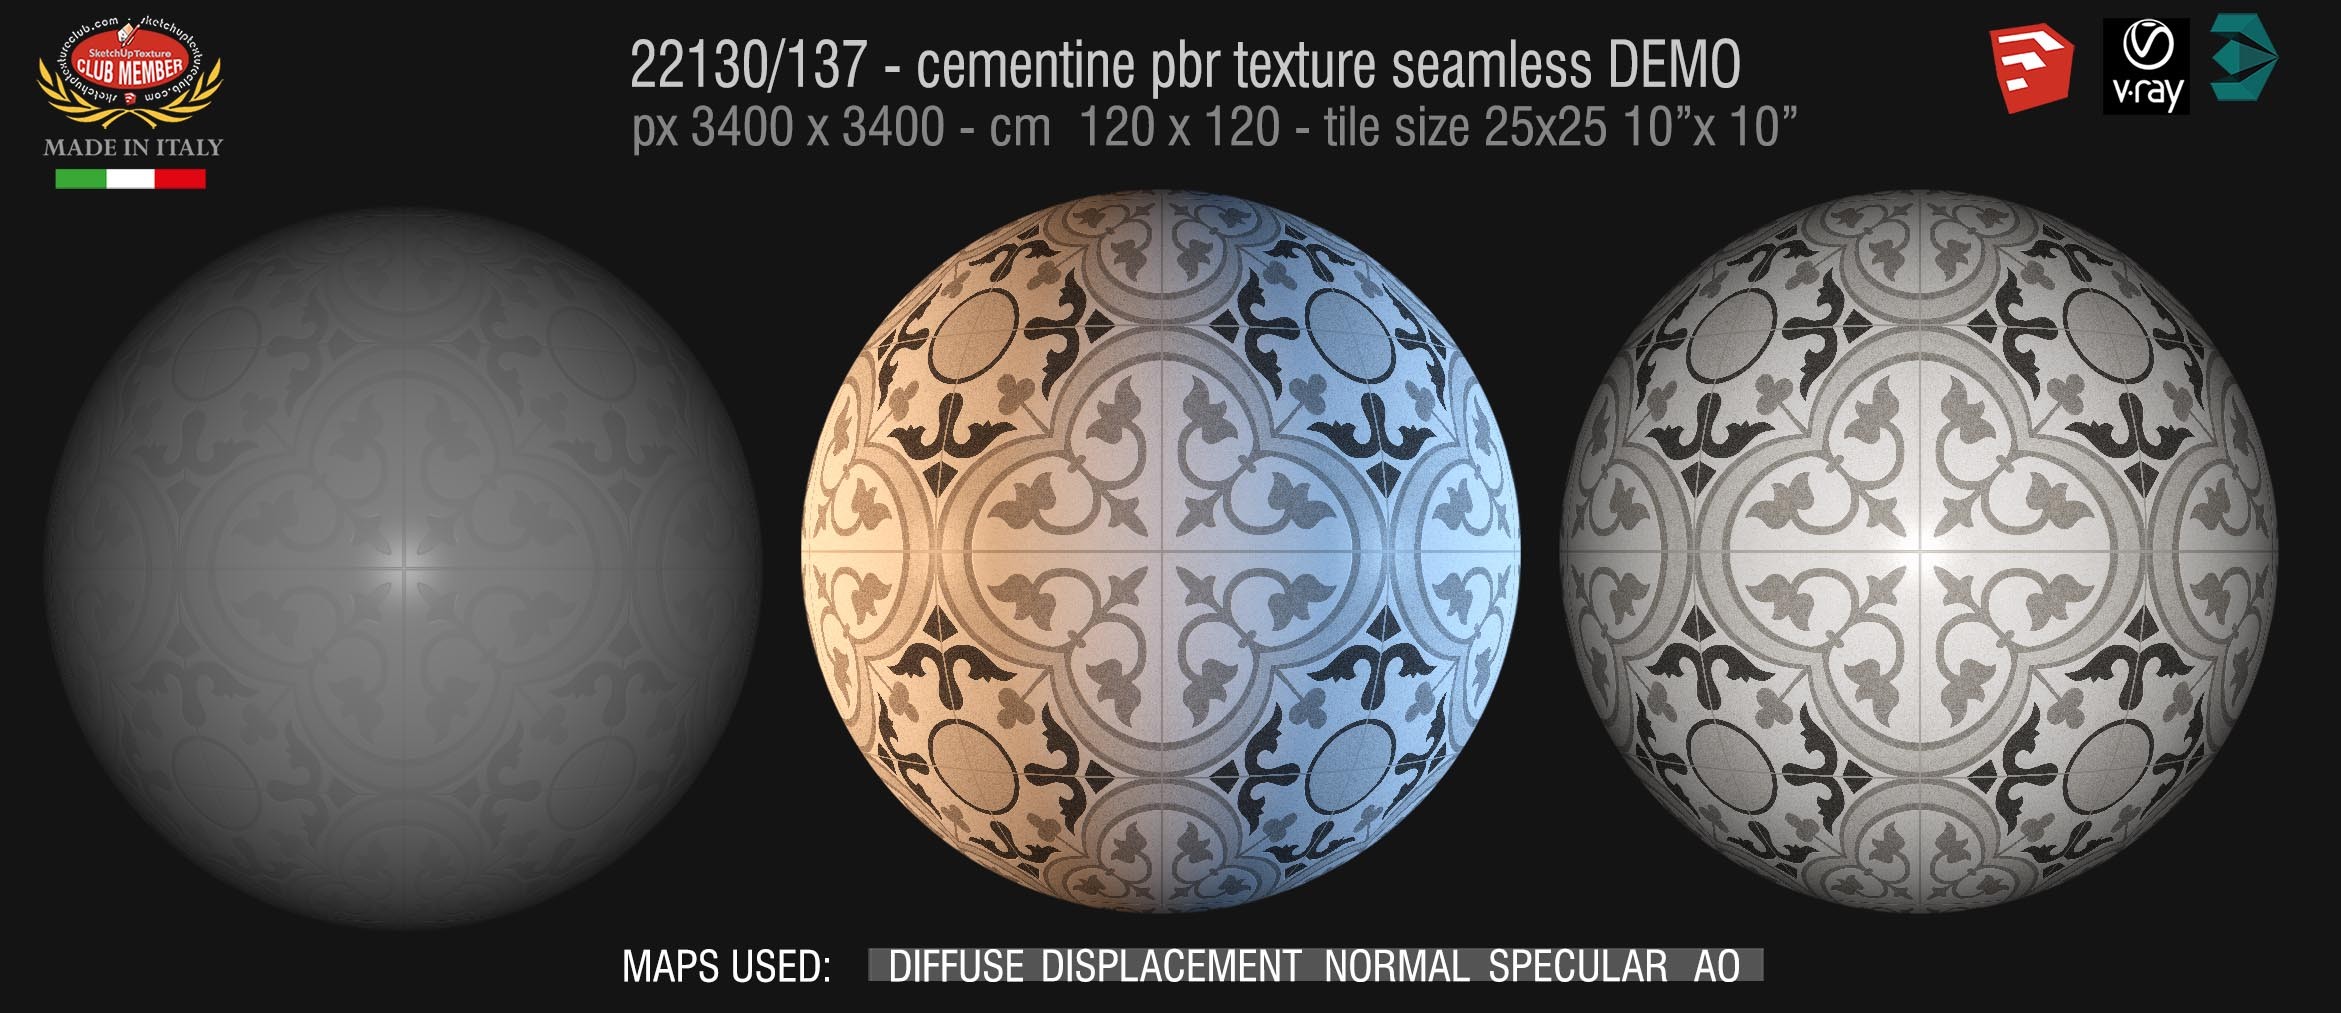 22130/137 cementine tiles Pbr seamless texture DEMO - porcelain stoneware concrete look